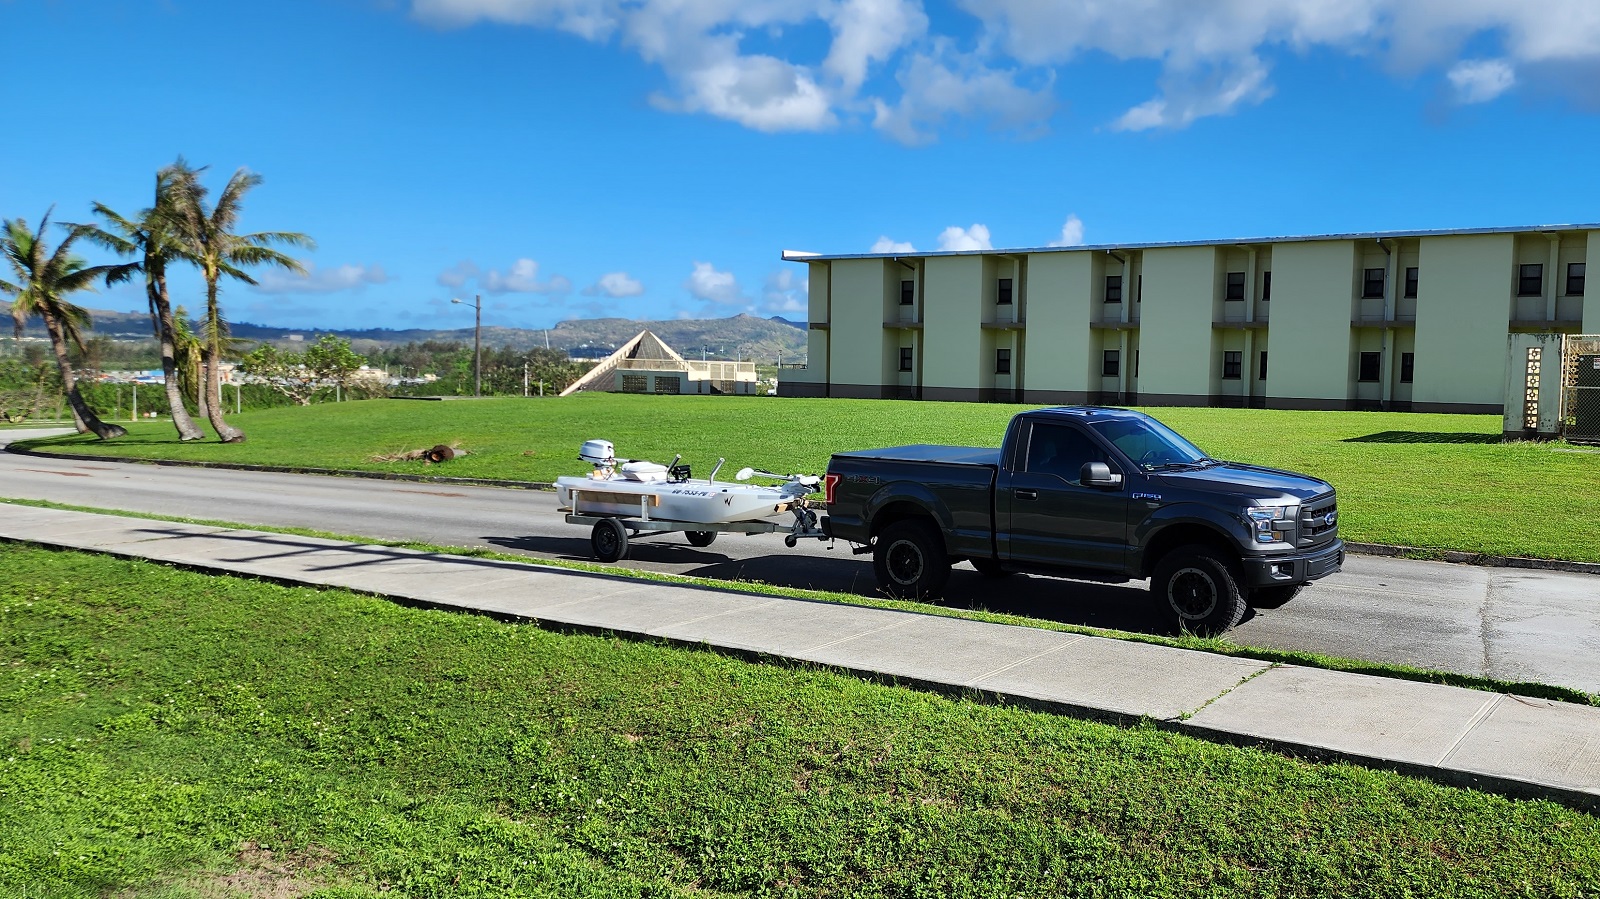 S4 microskiff on trailer - Guam